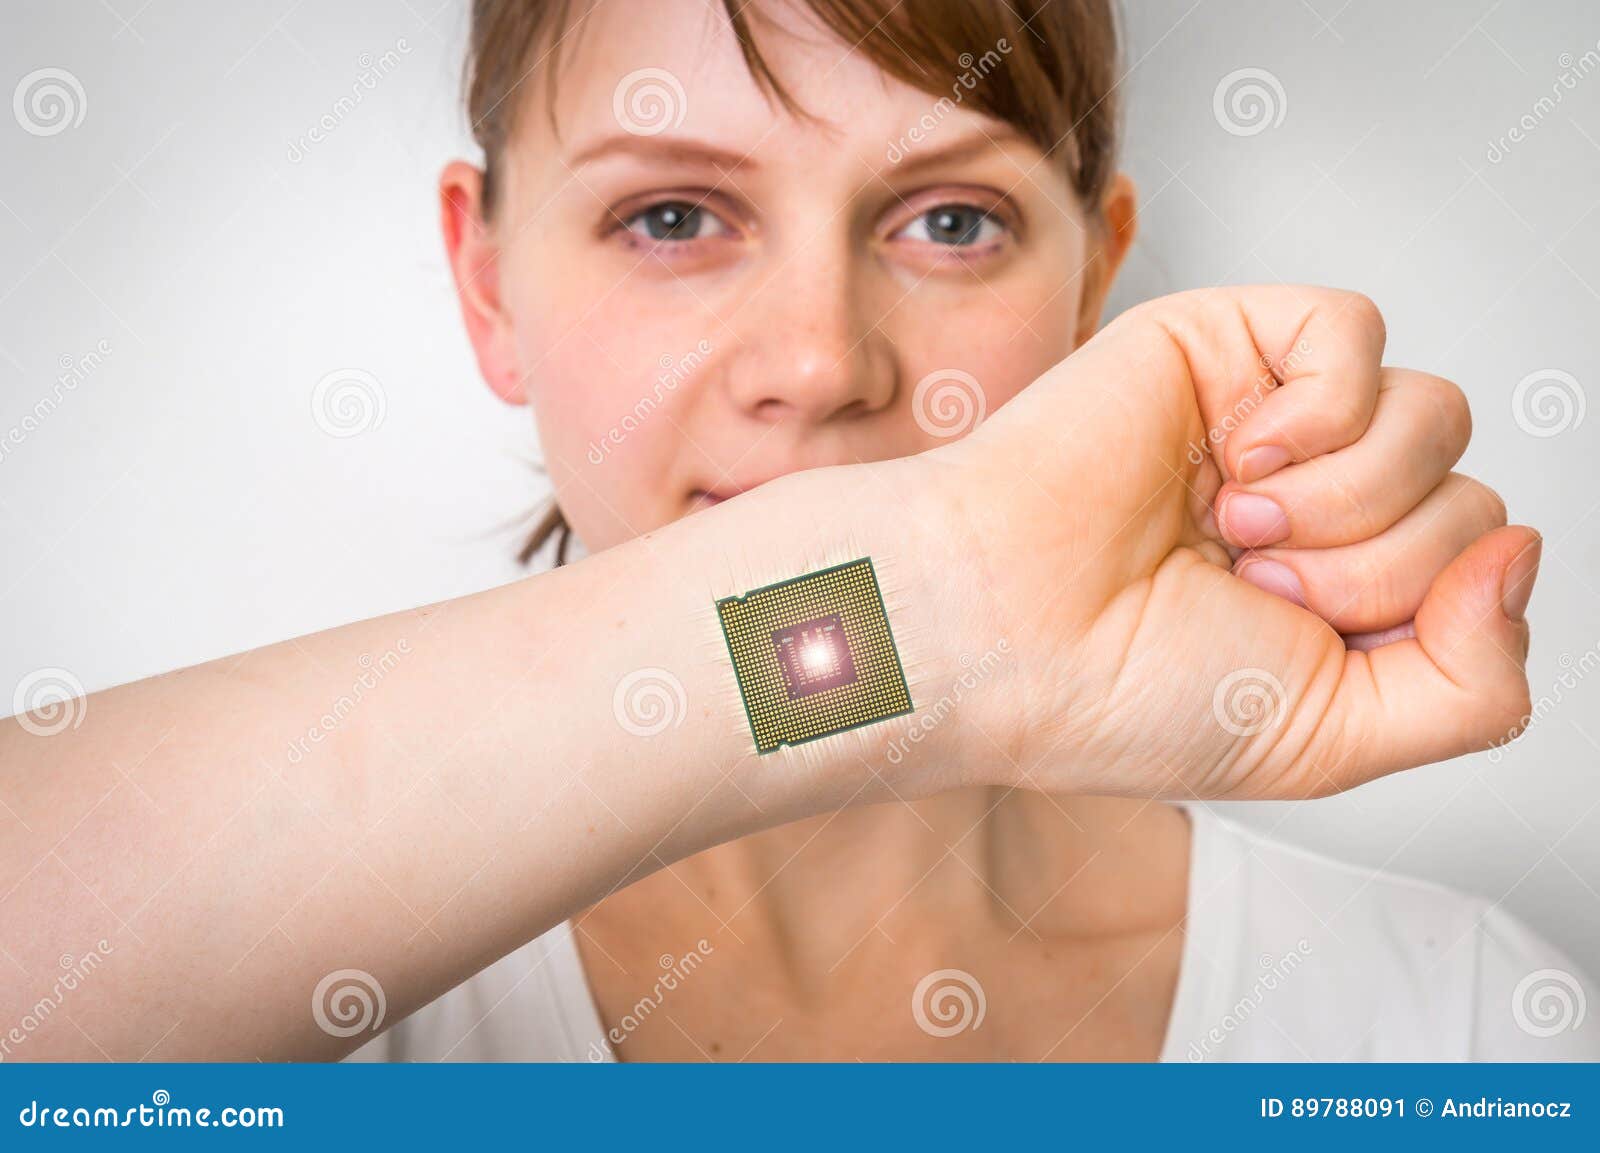 bionic chip processor implant in female human body